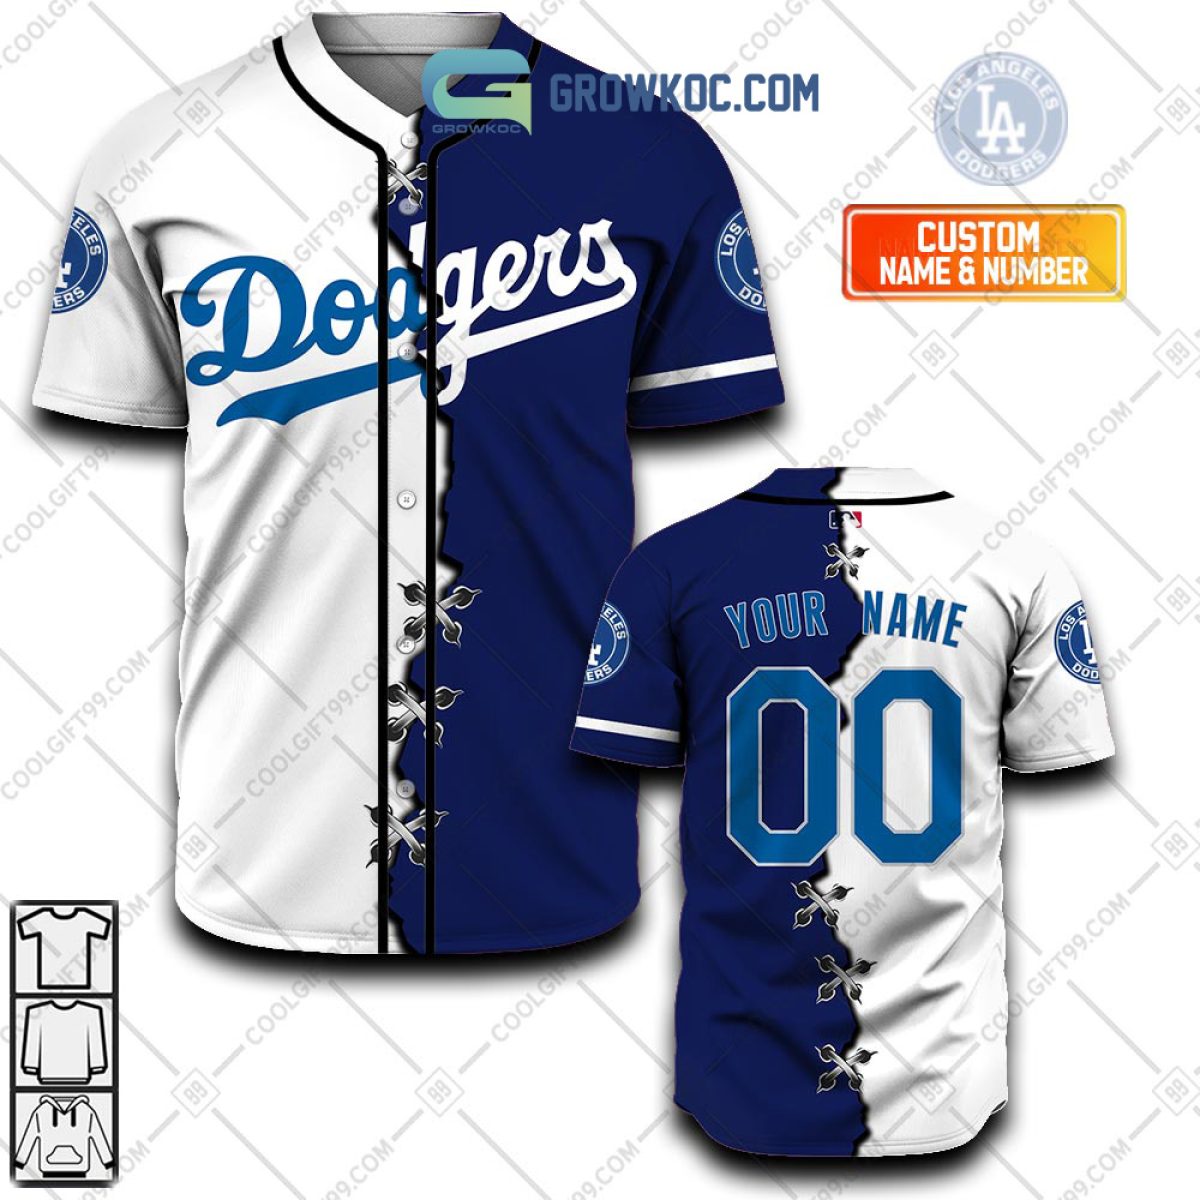 Custom xACE Baseball Max Dodgers Uniform